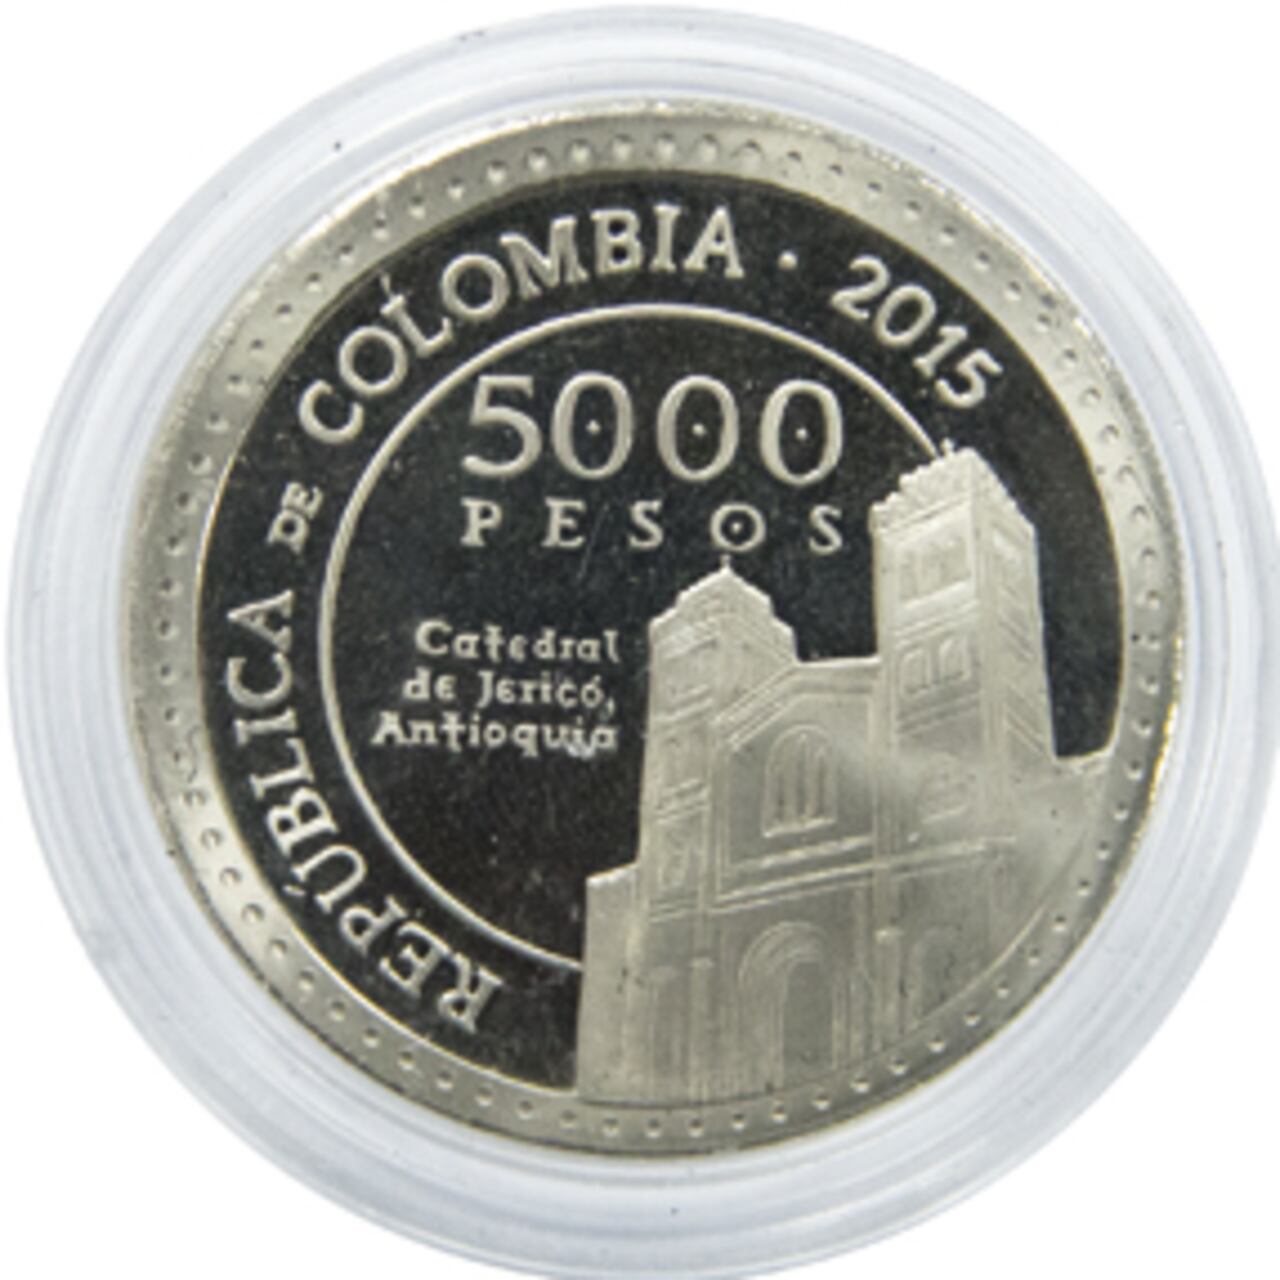 Moneda conmemorativa de la Santa Madre Laura Montoya Upegui